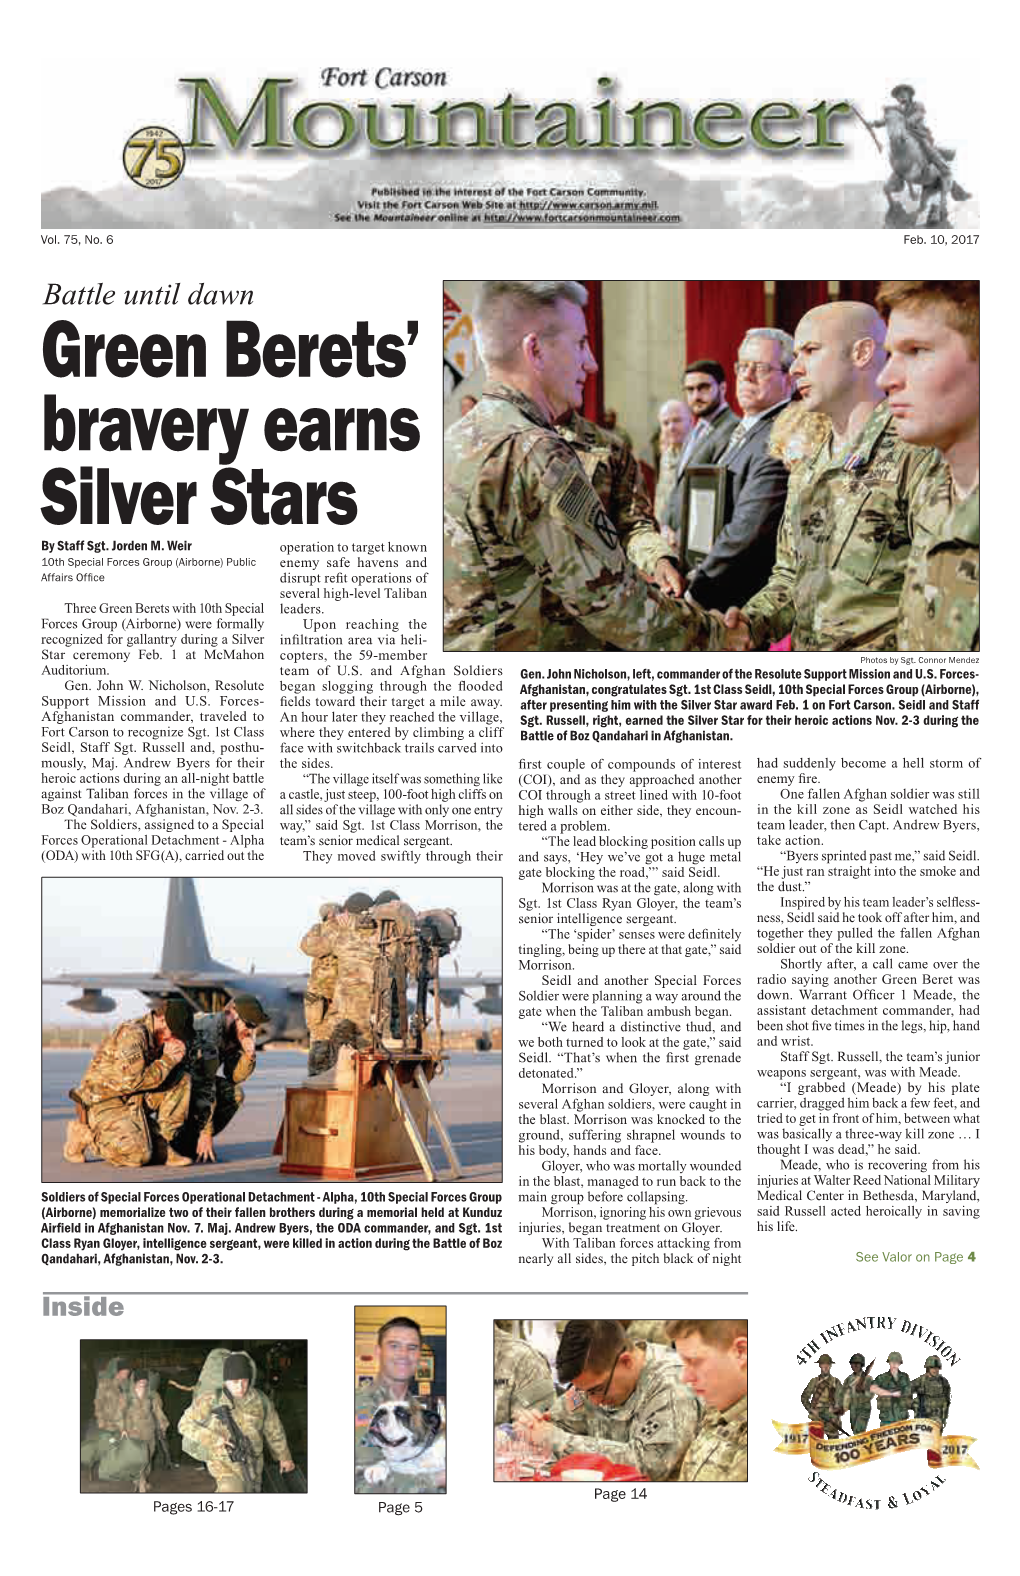 Green Berets' Bravery Earns Silver Stars